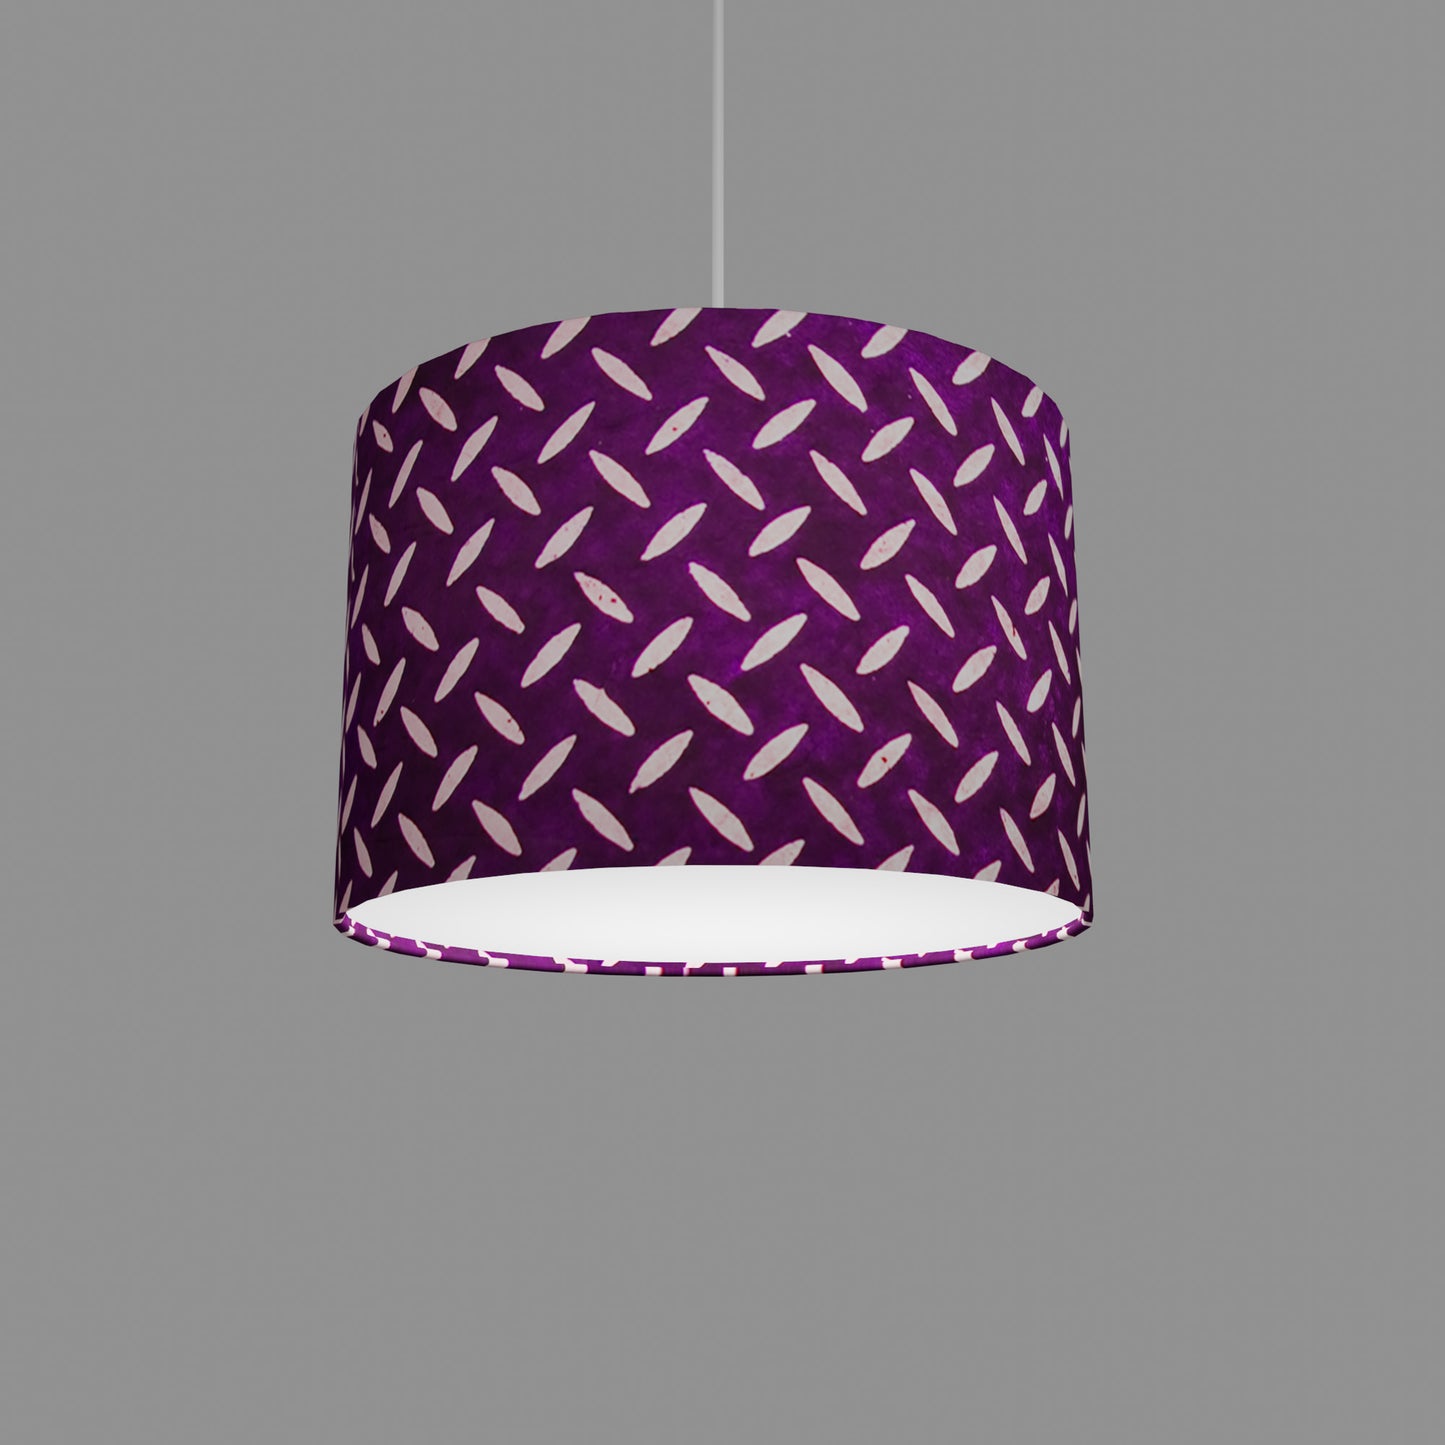 Drum Lamp Shade - P13 - Batik Tread Plate Purple, 30cm(d) x 20cm(h)